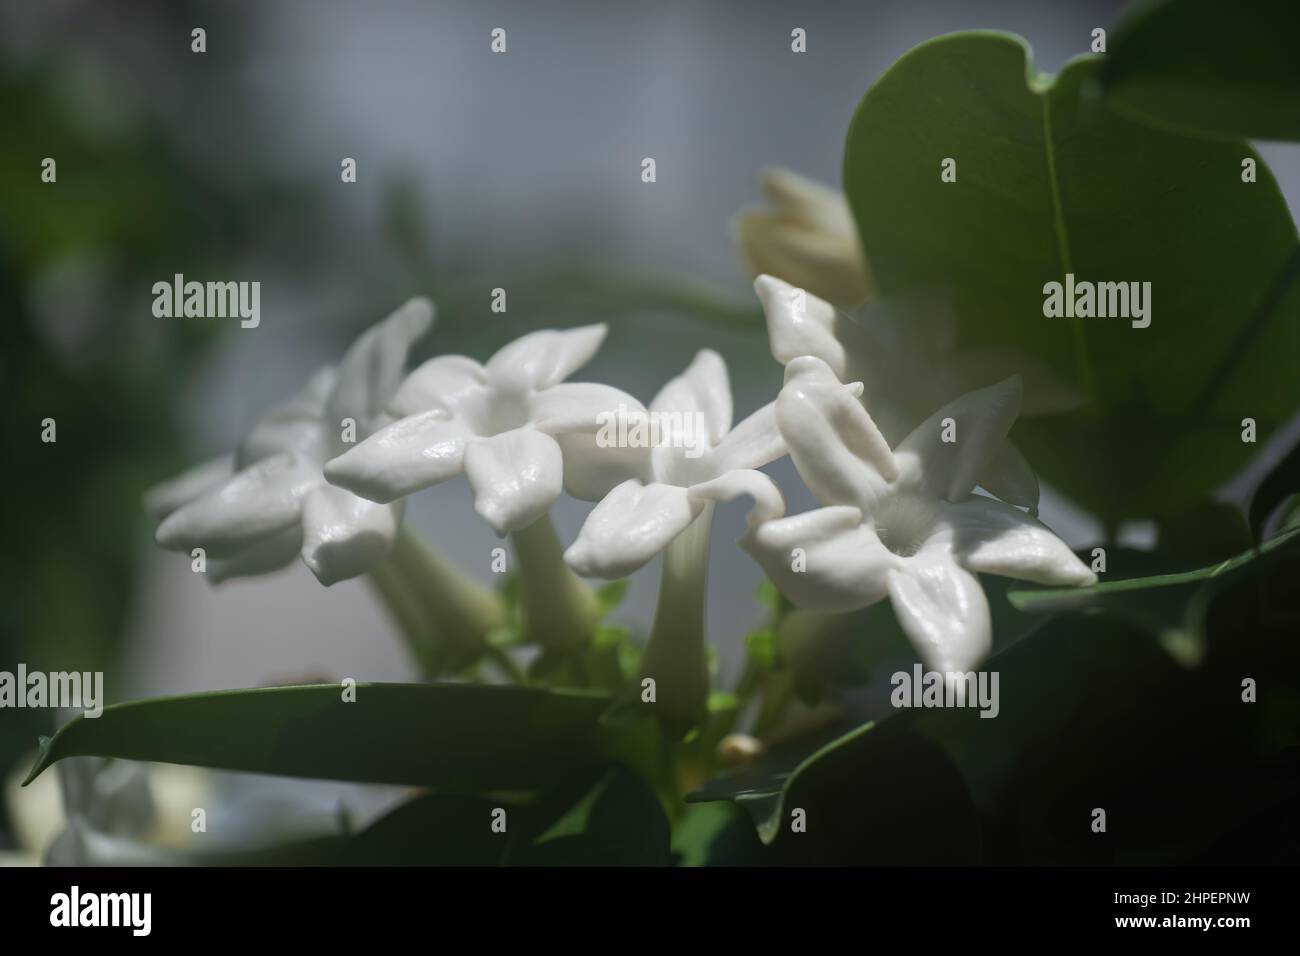 Stephanotis floribunda white waxy flowers, common names: Madagascar Jasmine, Waxflower, Hawaiian Wedding Flower or Bridal Wreath, flowering plant in t Stock Photo